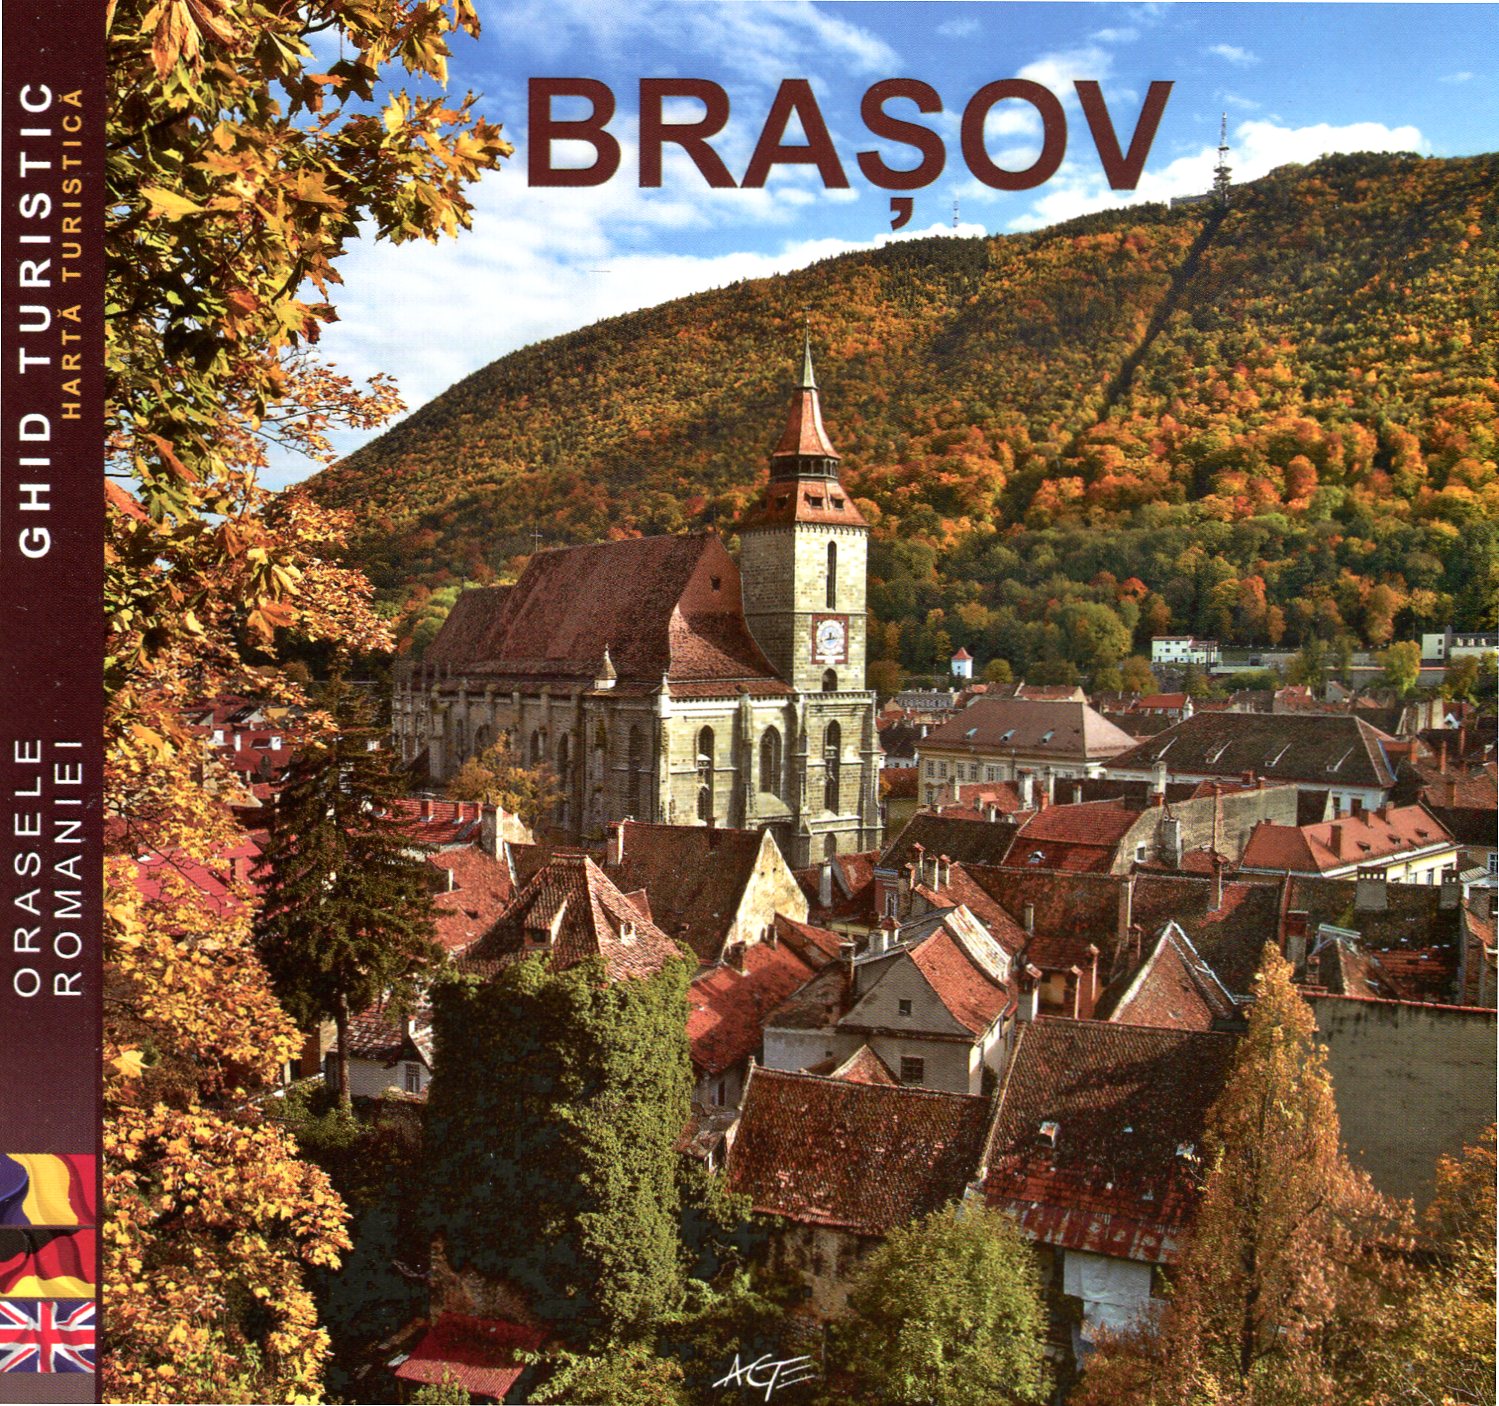 Brasov - Ghid turistic - George Avanu